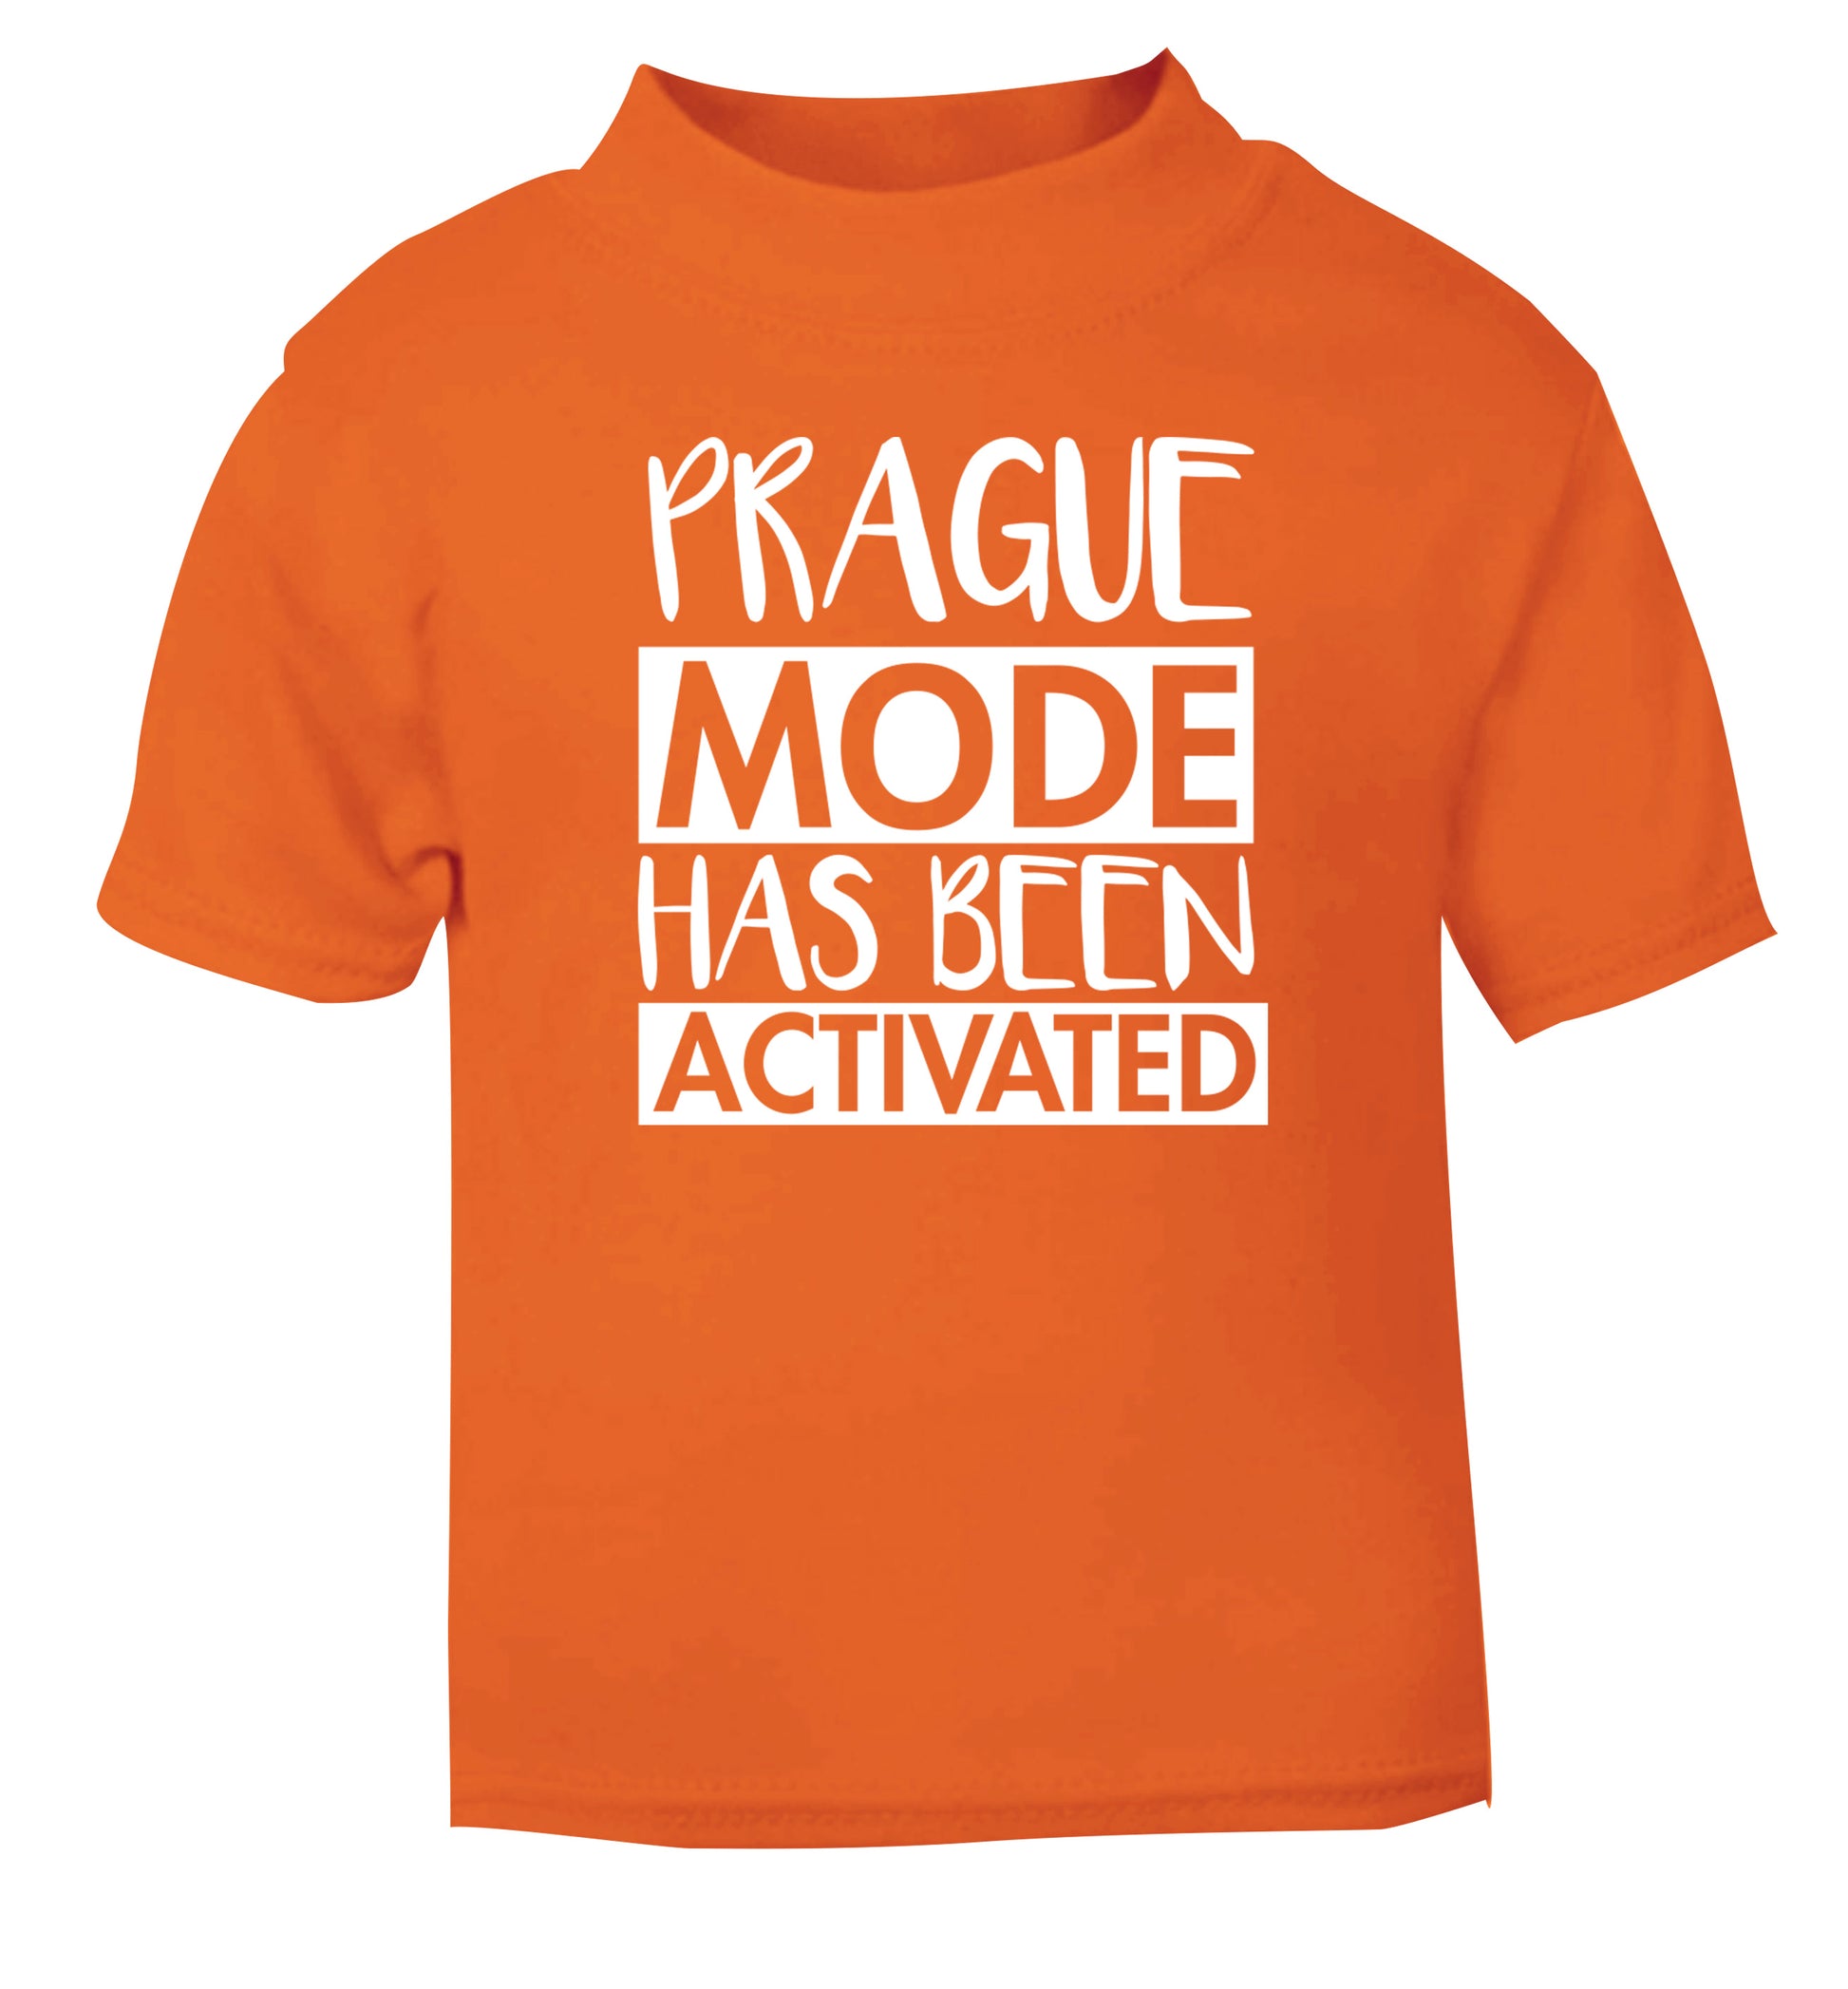 Prague mode has been activated orange Baby Toddler Tshirt 2 Years